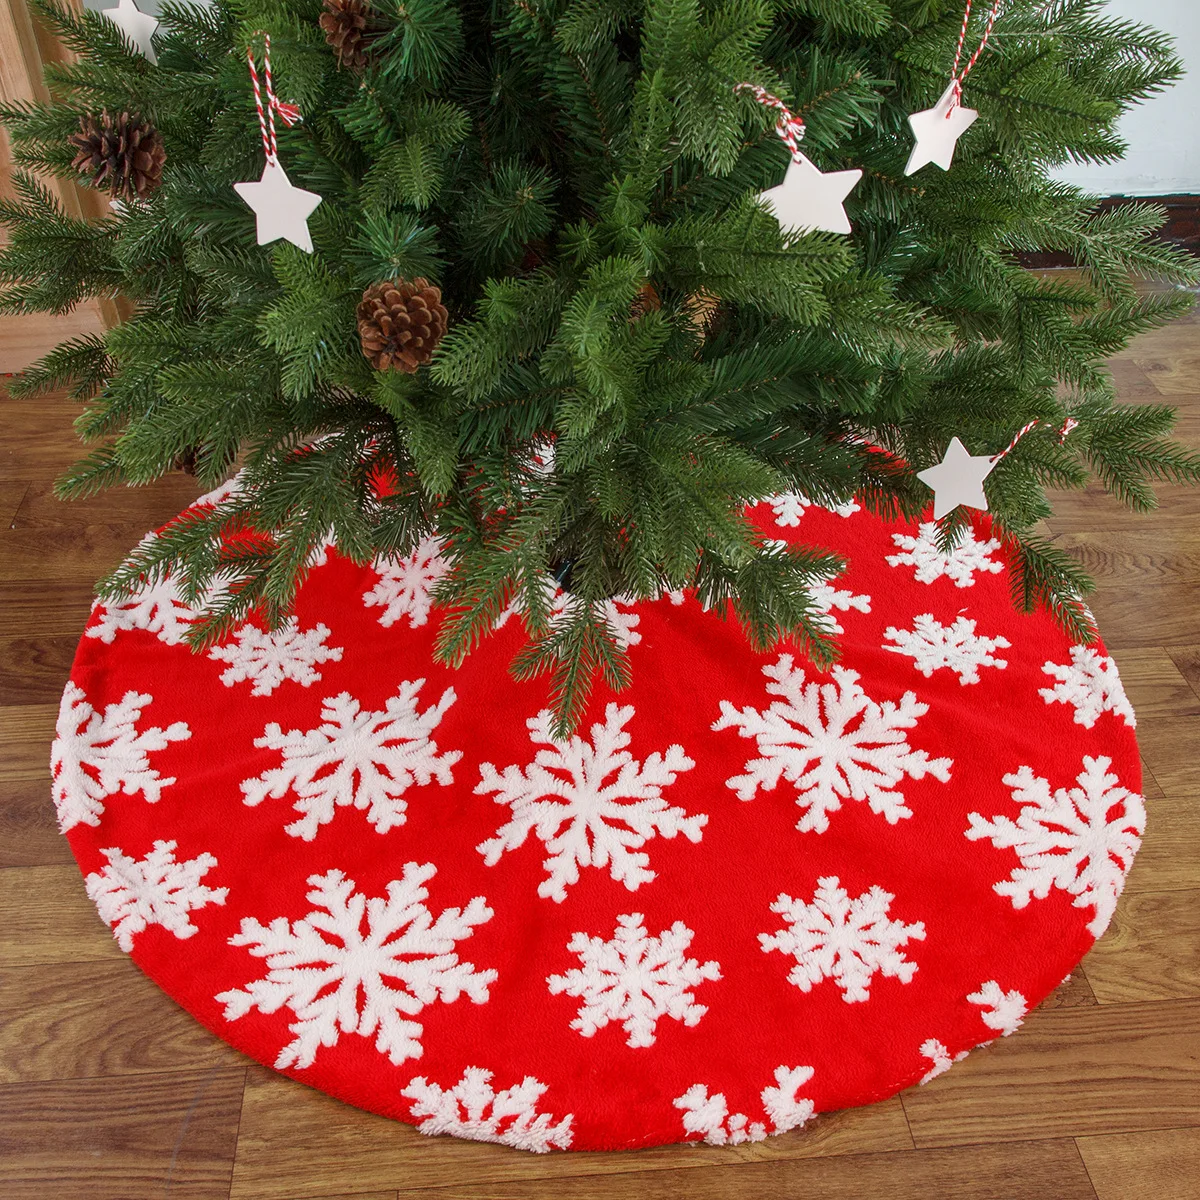 

KG Xmas In Stock Noel Navidad 35 Inch/48 Inch Plush Velvet Xmas Tree Skirt Large Christmas Tree Skirt For Holiday Decoration